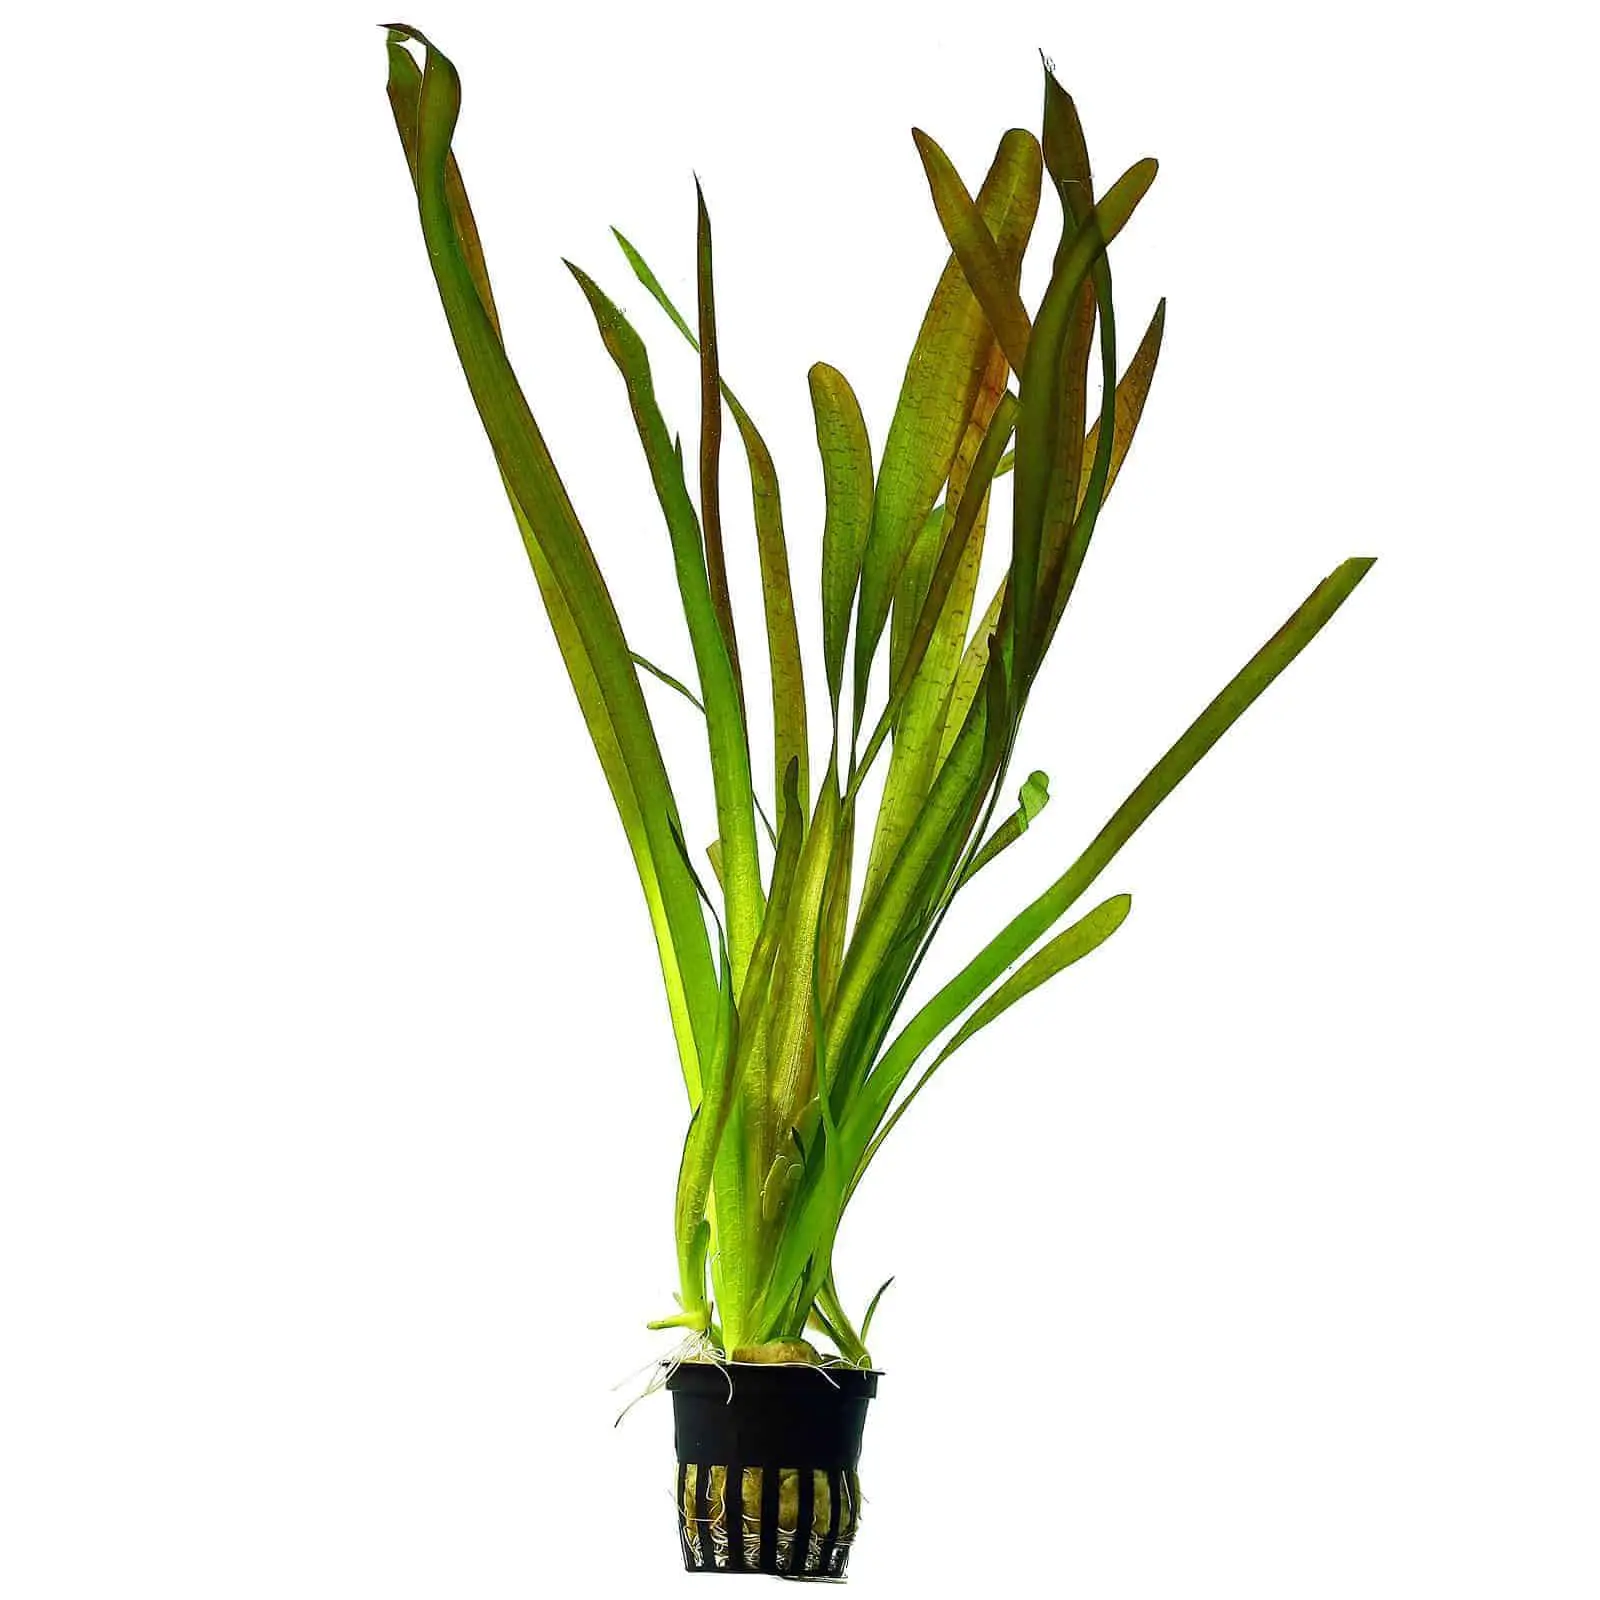 Low light plants - vallisneria